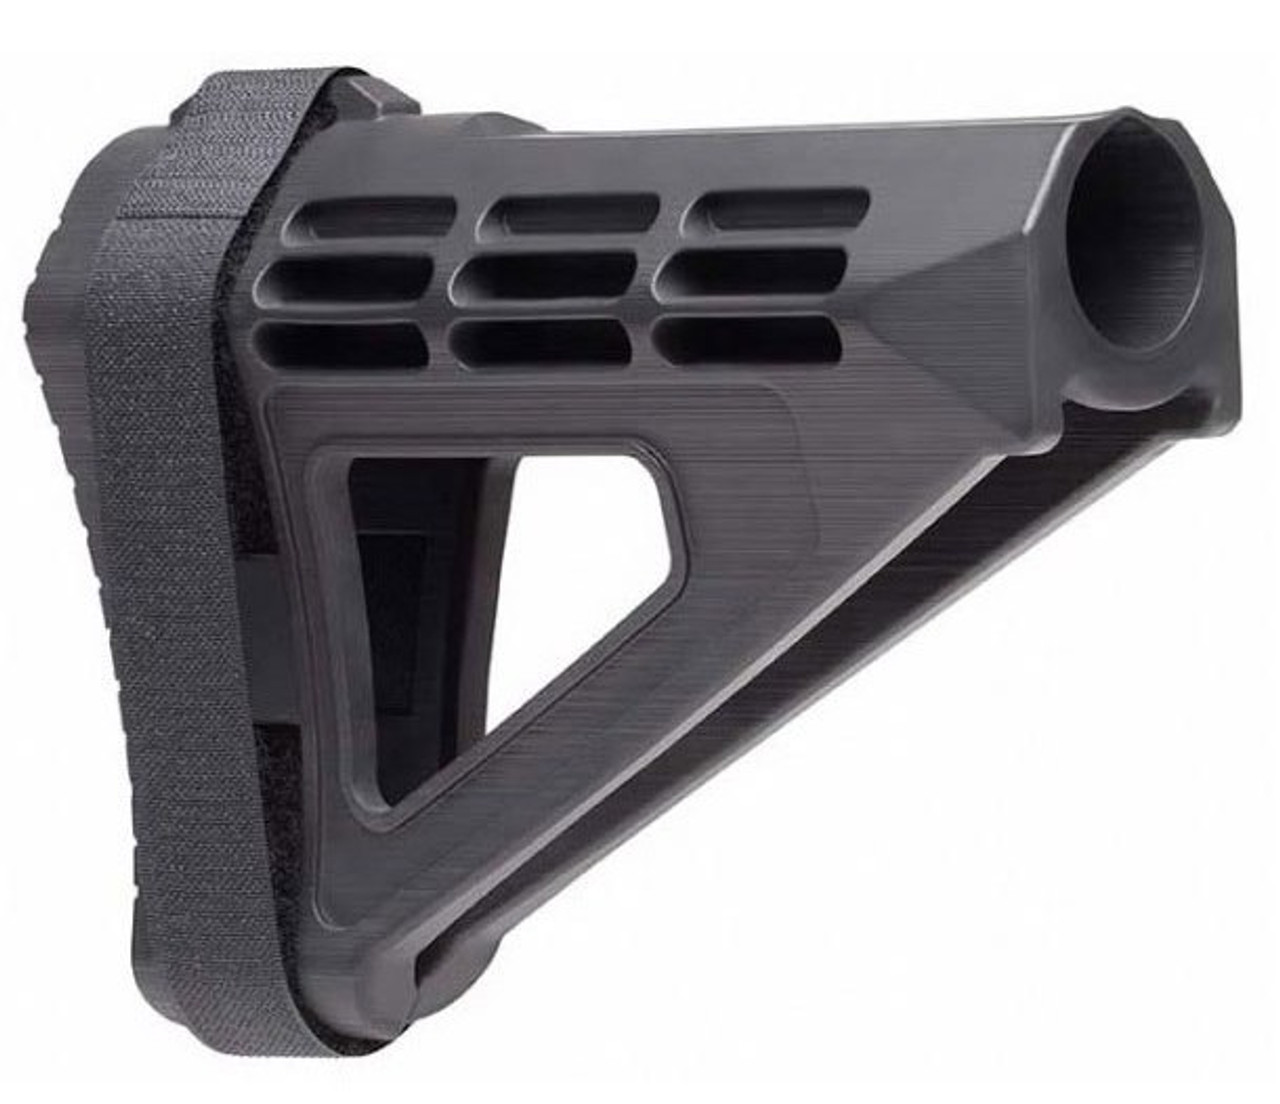 SB Tactical SBM4 Pistol Stabilizing Brace For Sale In Stock